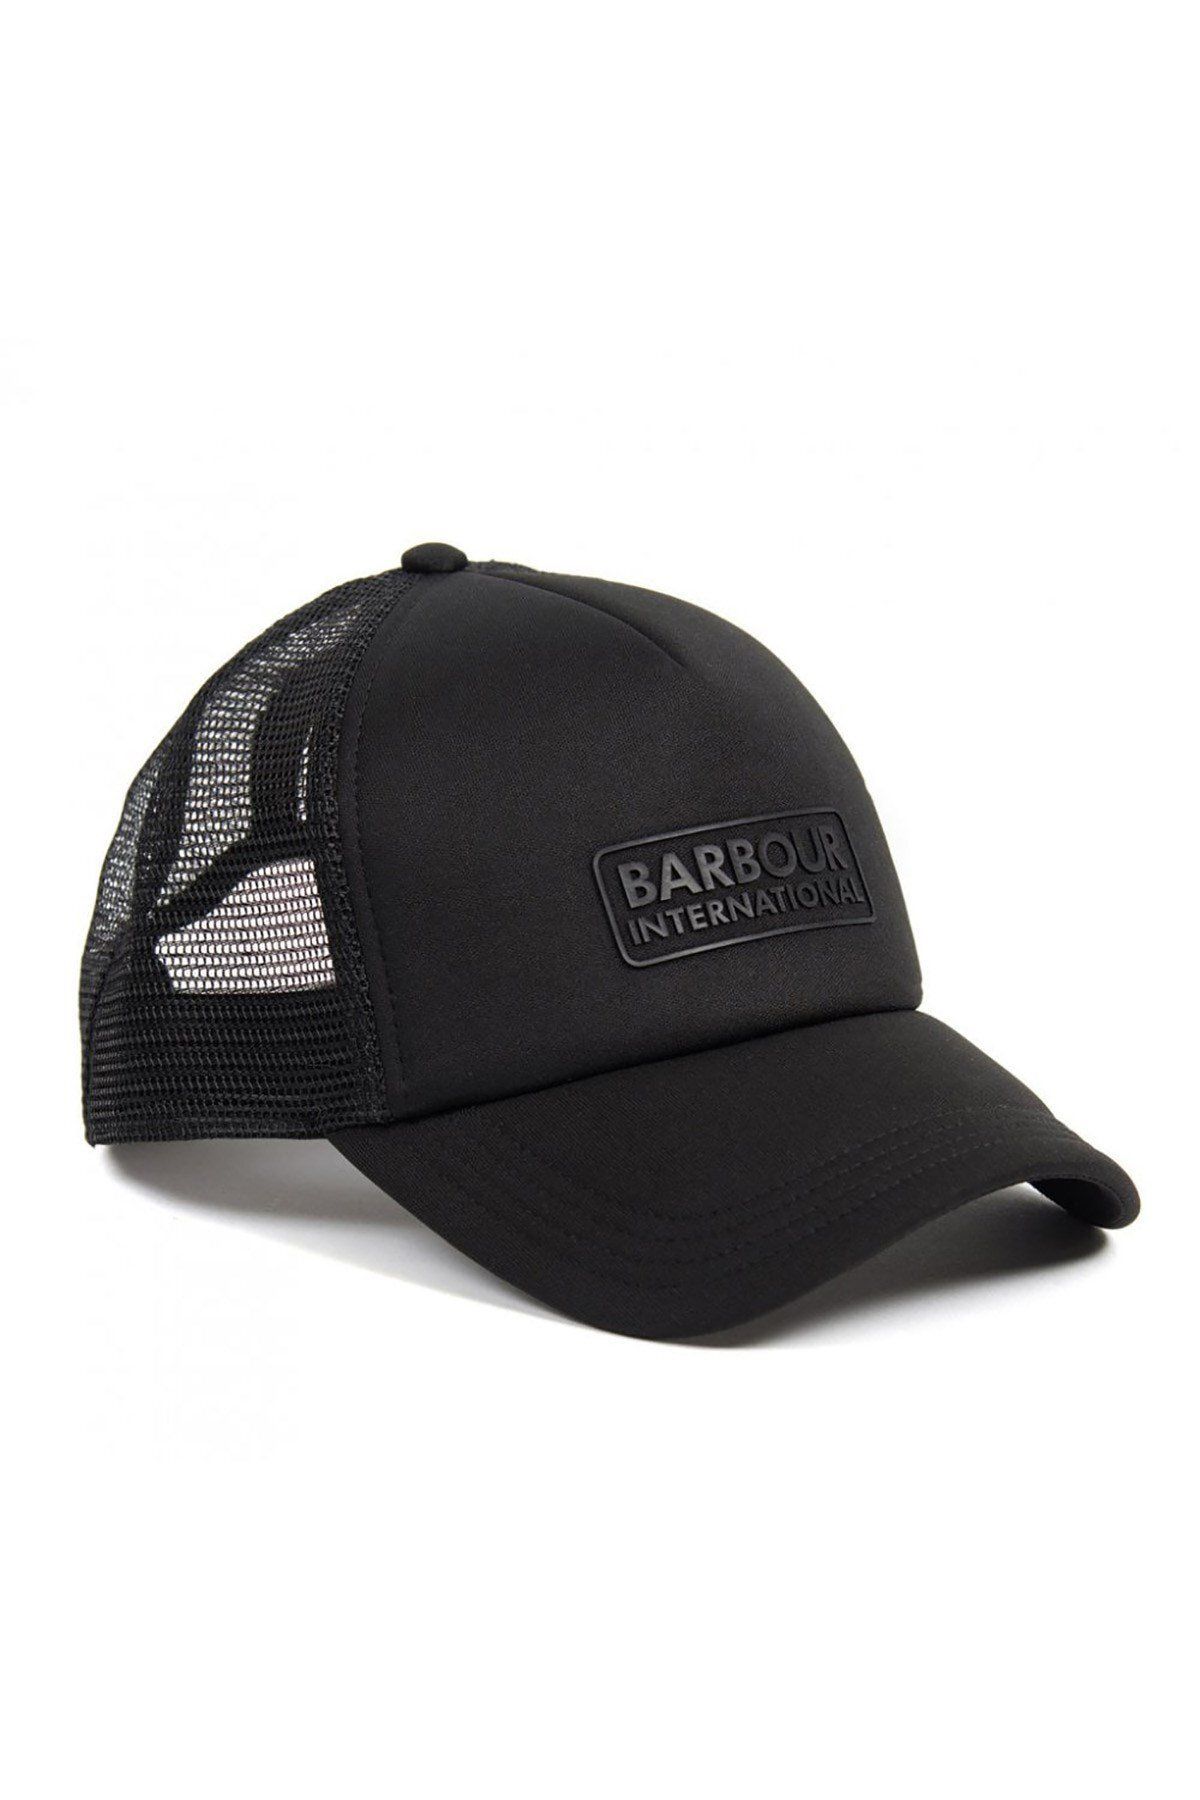 Barbour B.int. Heli Trucker Hat BK11 Black